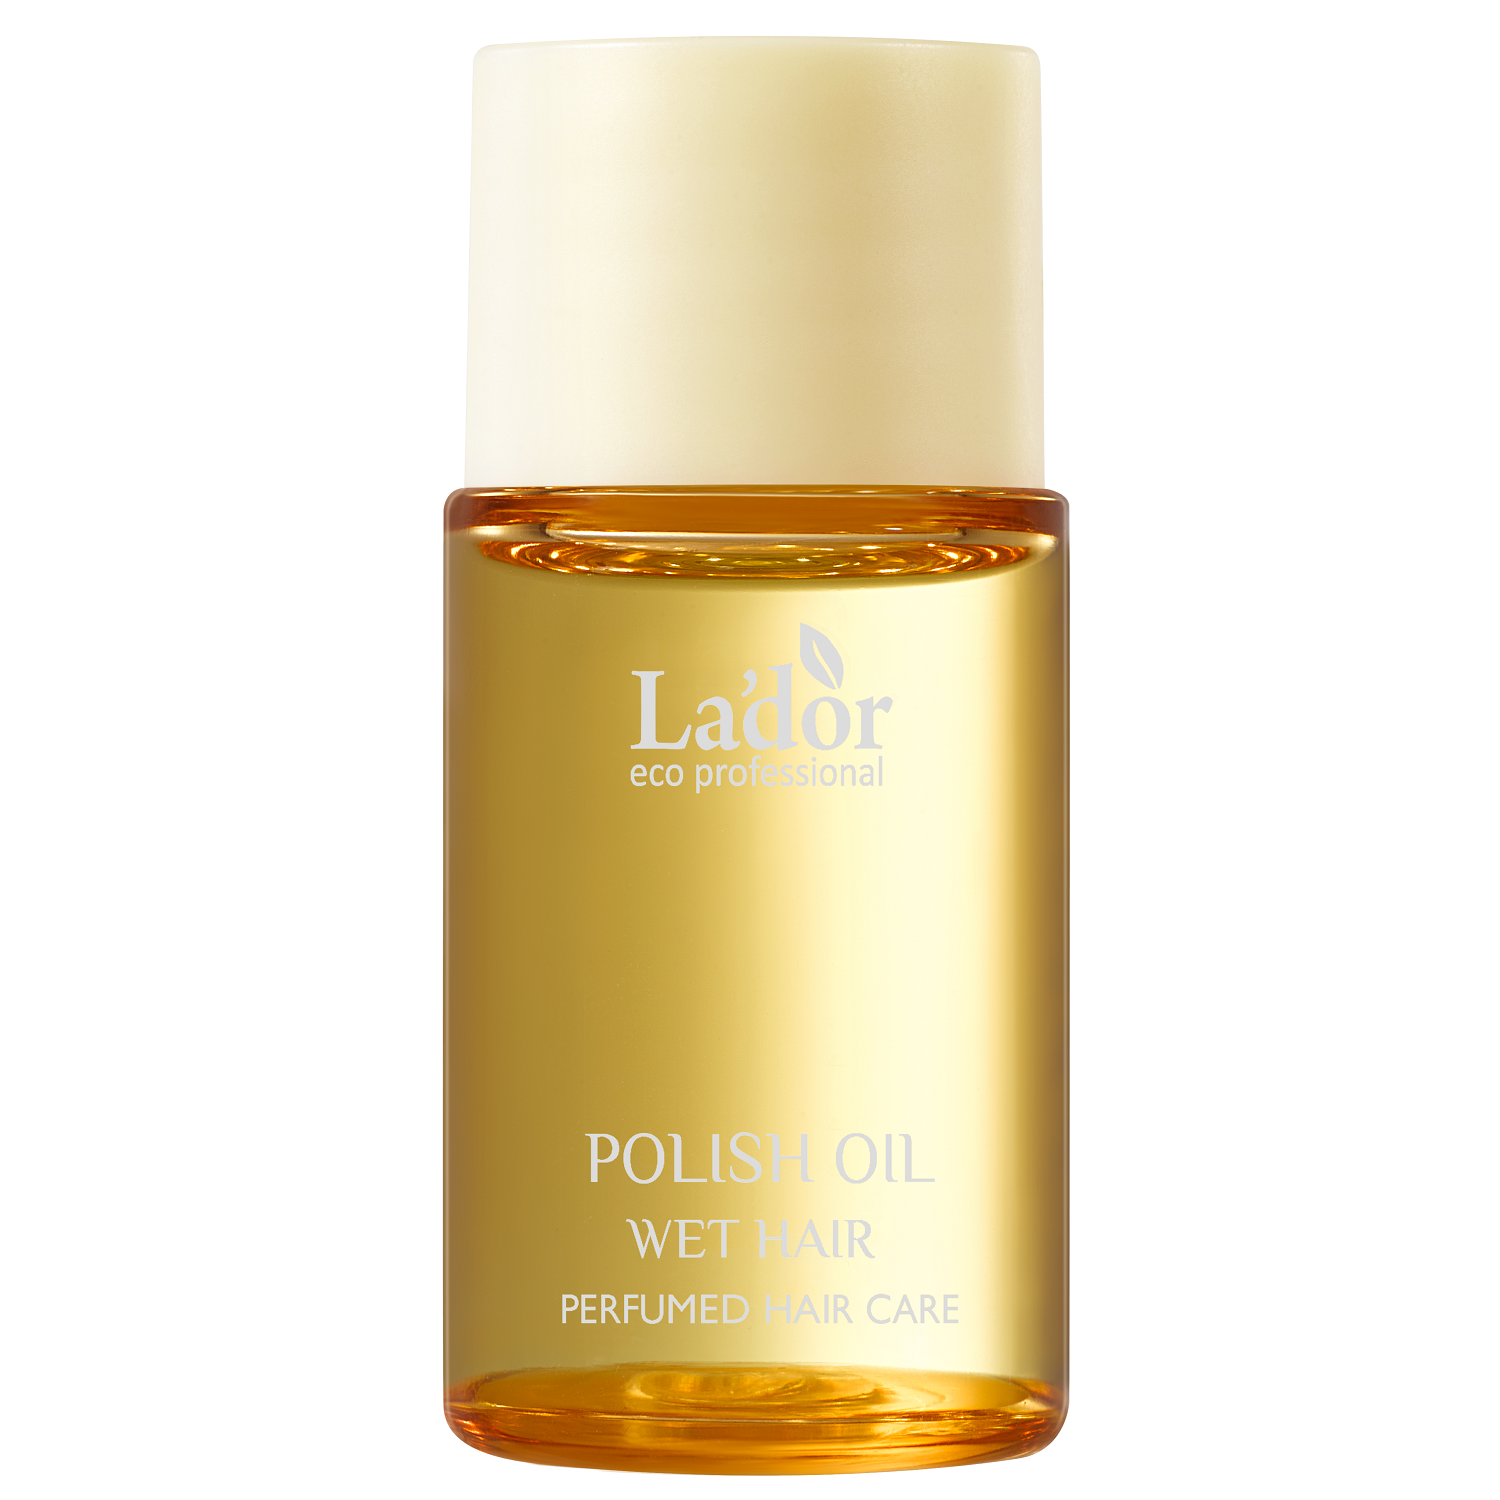 La'Dor Масло с ароматом цитруса для эффекта мокрых волос White Yuja, 10 мл (La'Dor, Polish Oil)